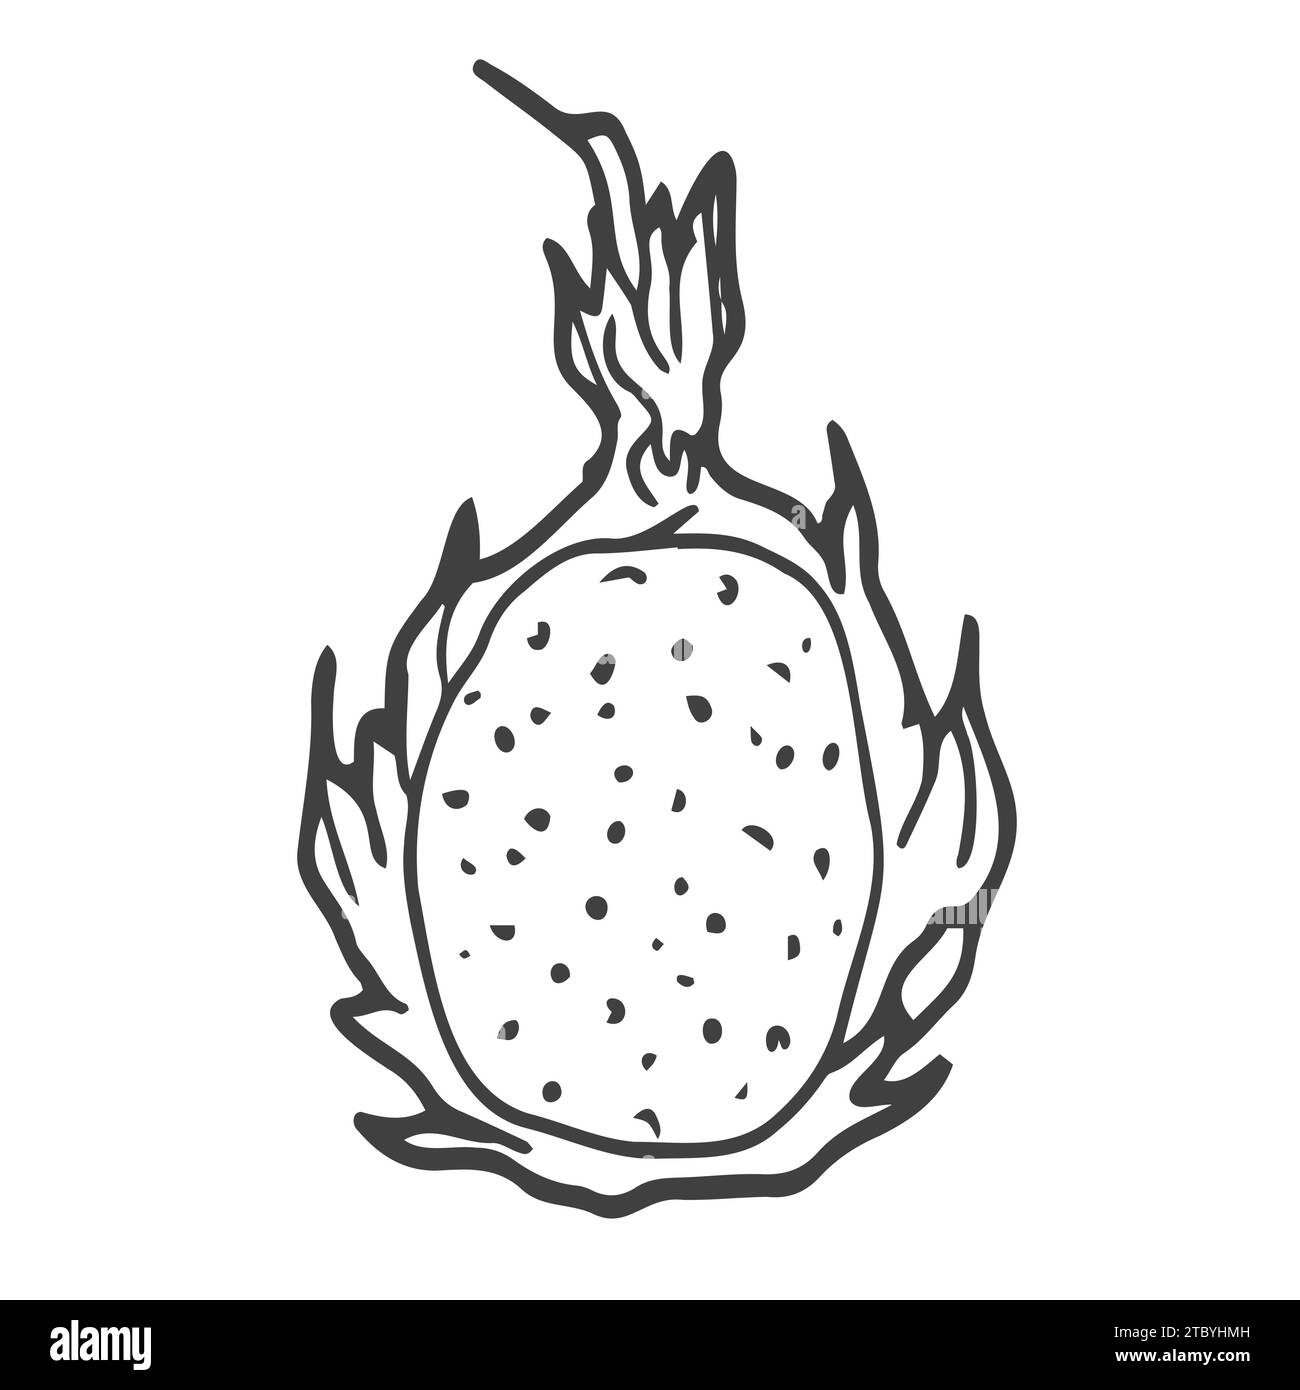 Pitaya Drachenfrucht Grafik schwarz weiß isolierte Skizze Illustration Stock Vektor